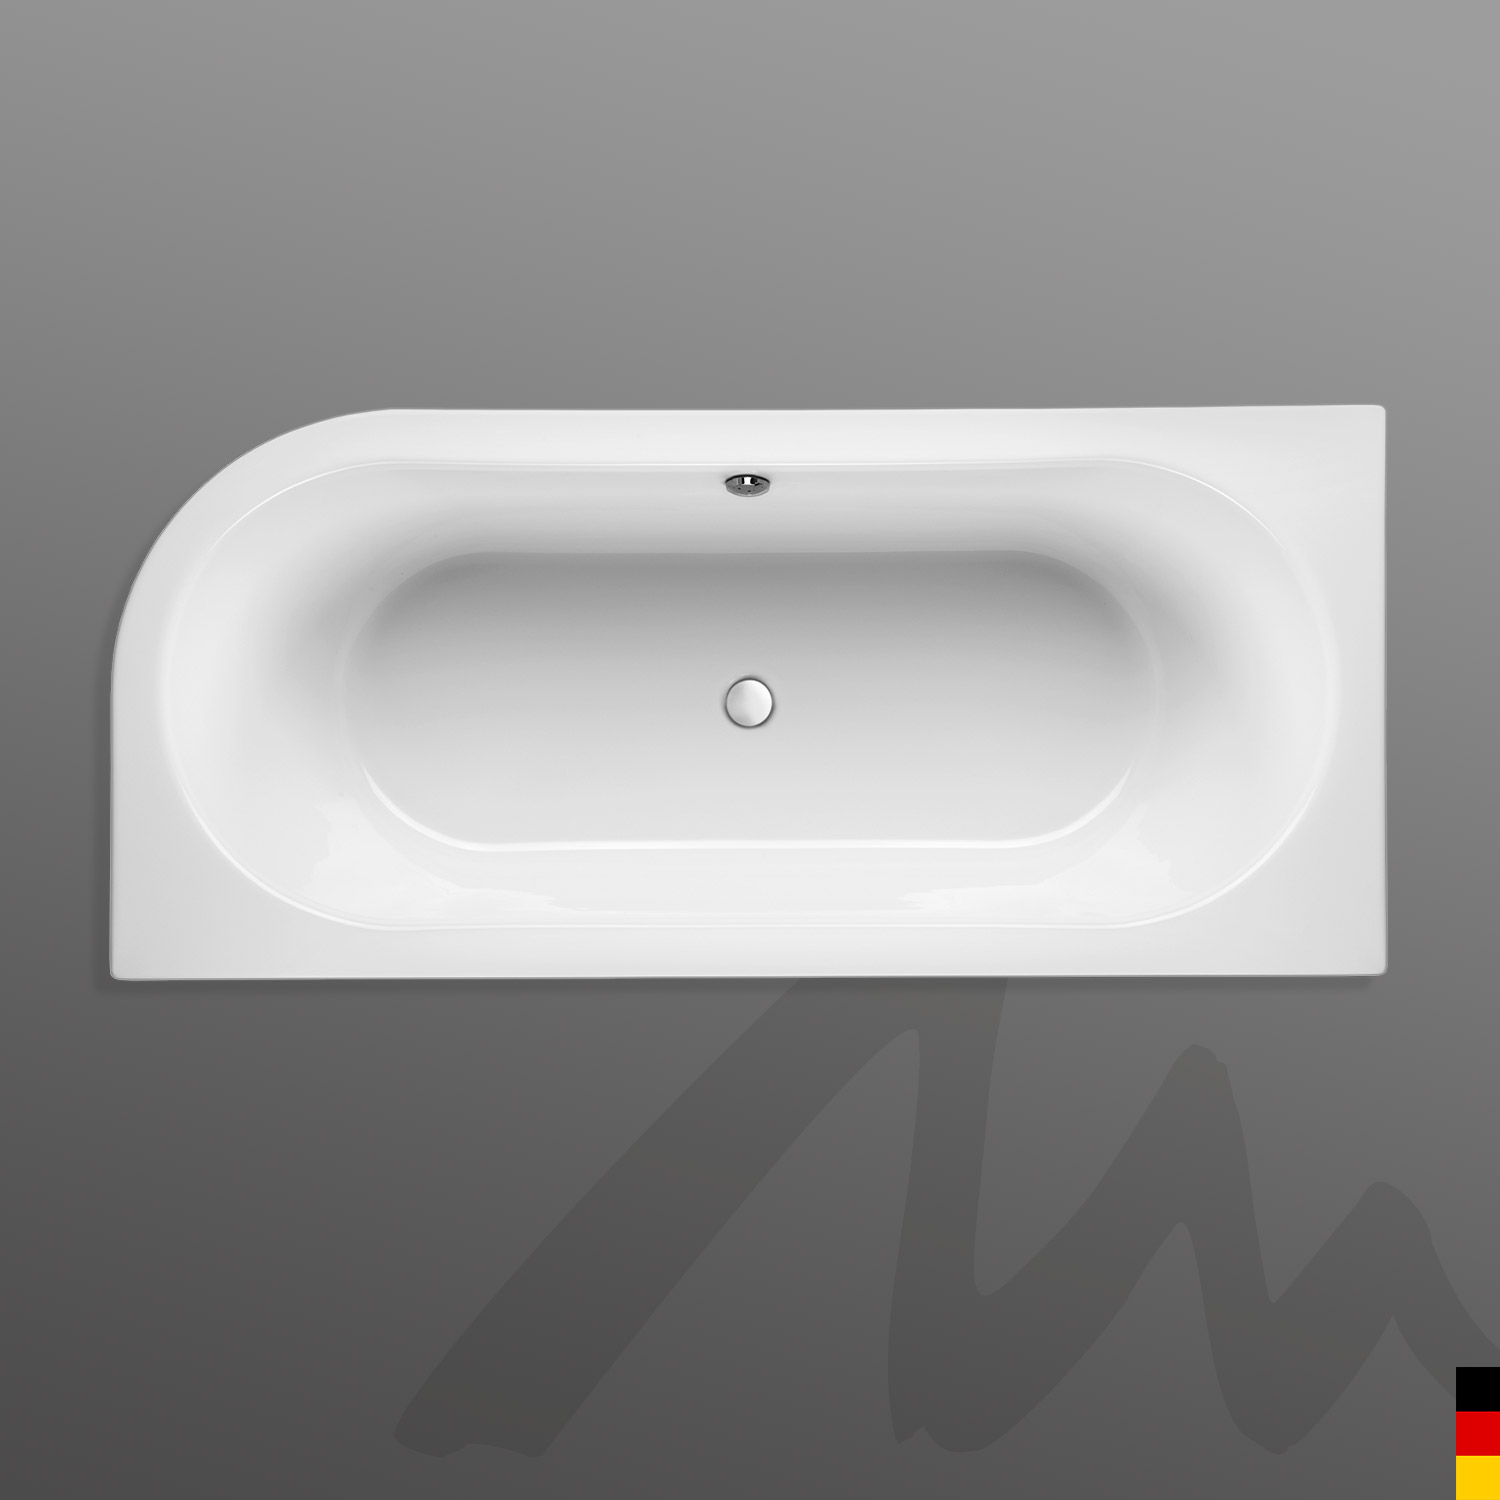 Mauersberger Badewanne Oval Ubesa 180/80  180x80x44cm  Farbe:weiß